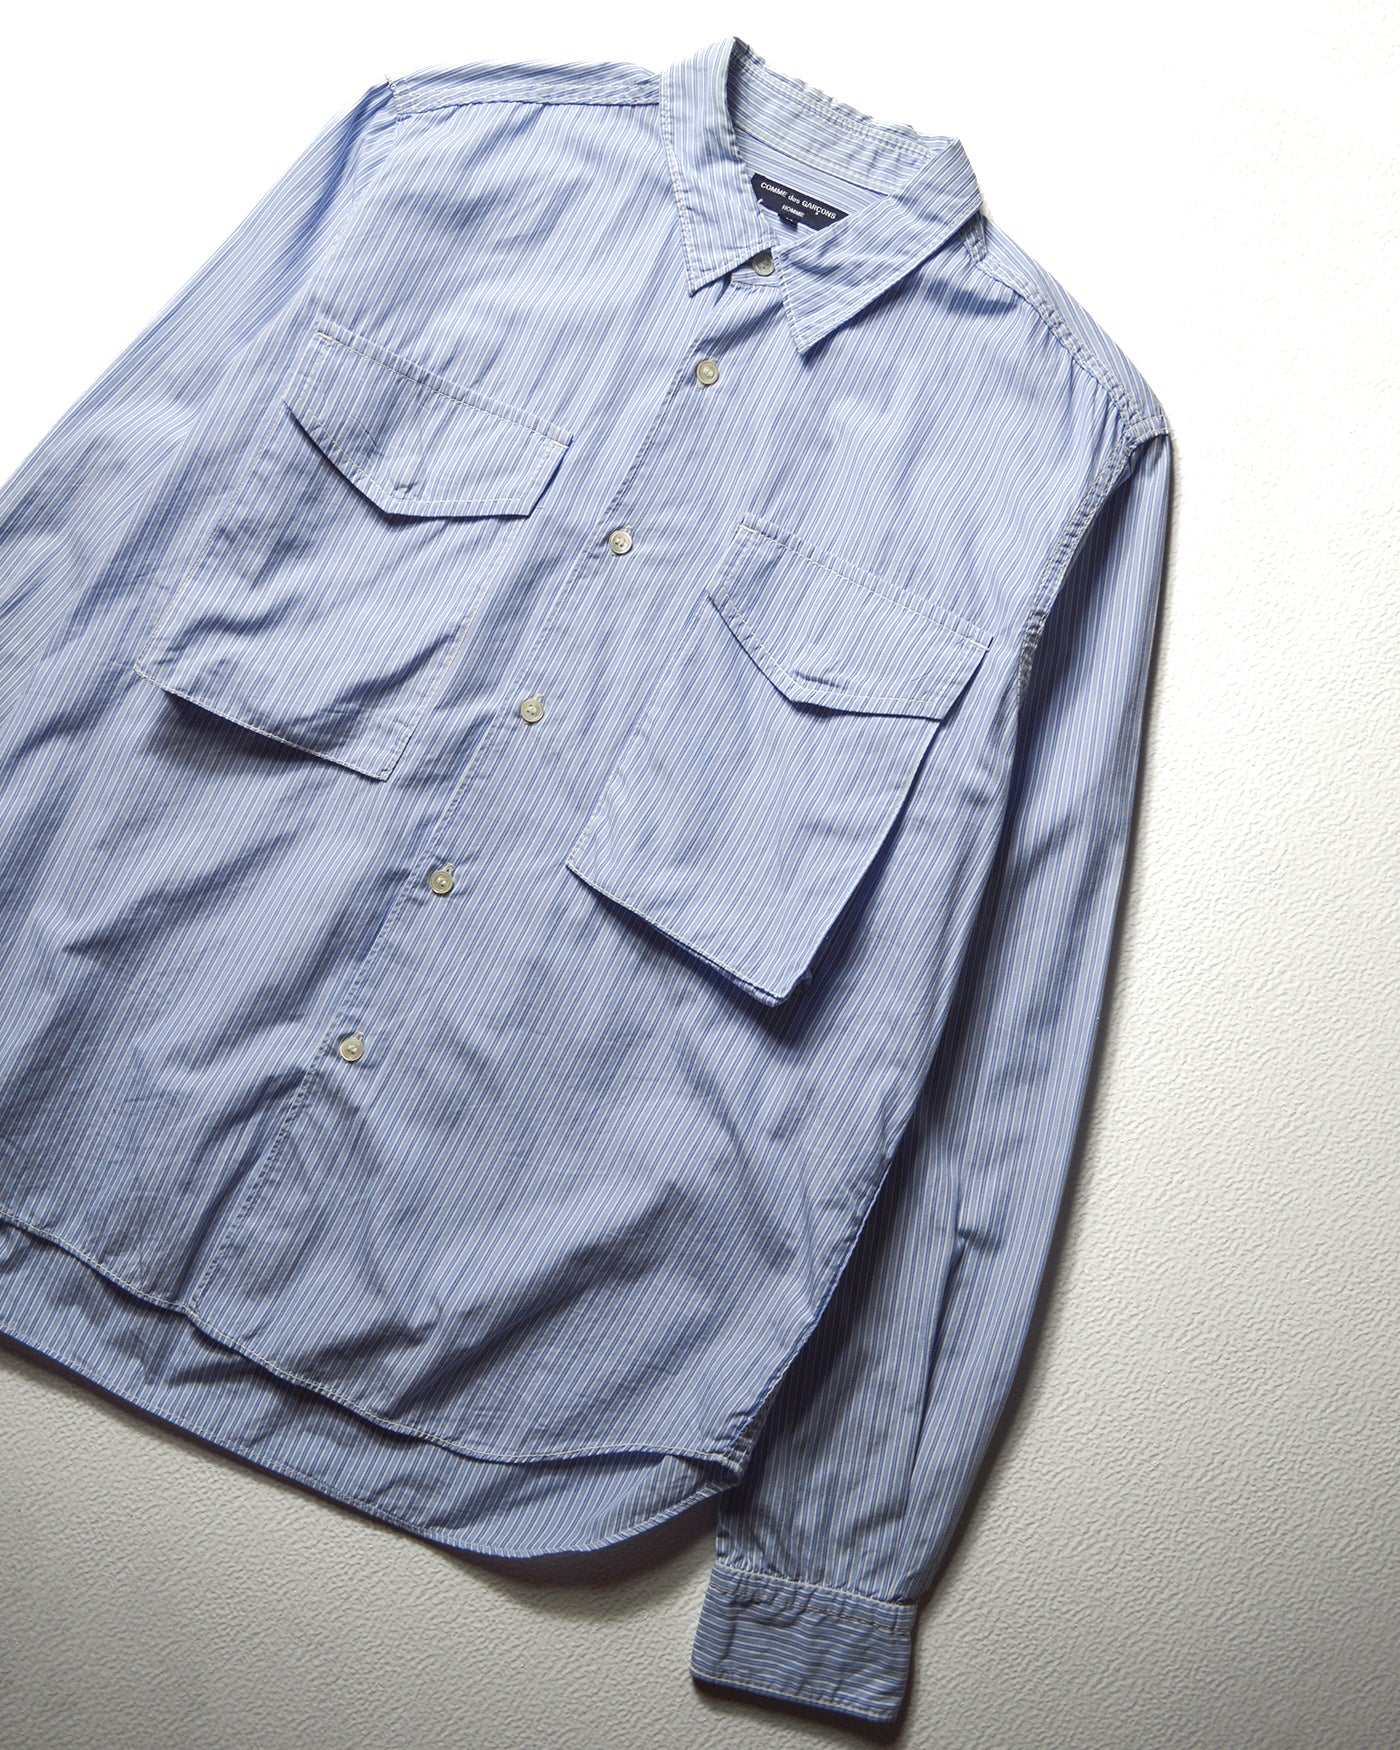 2007 Striped Blue 3-d Cargo Patch Pocket Shirt (M)